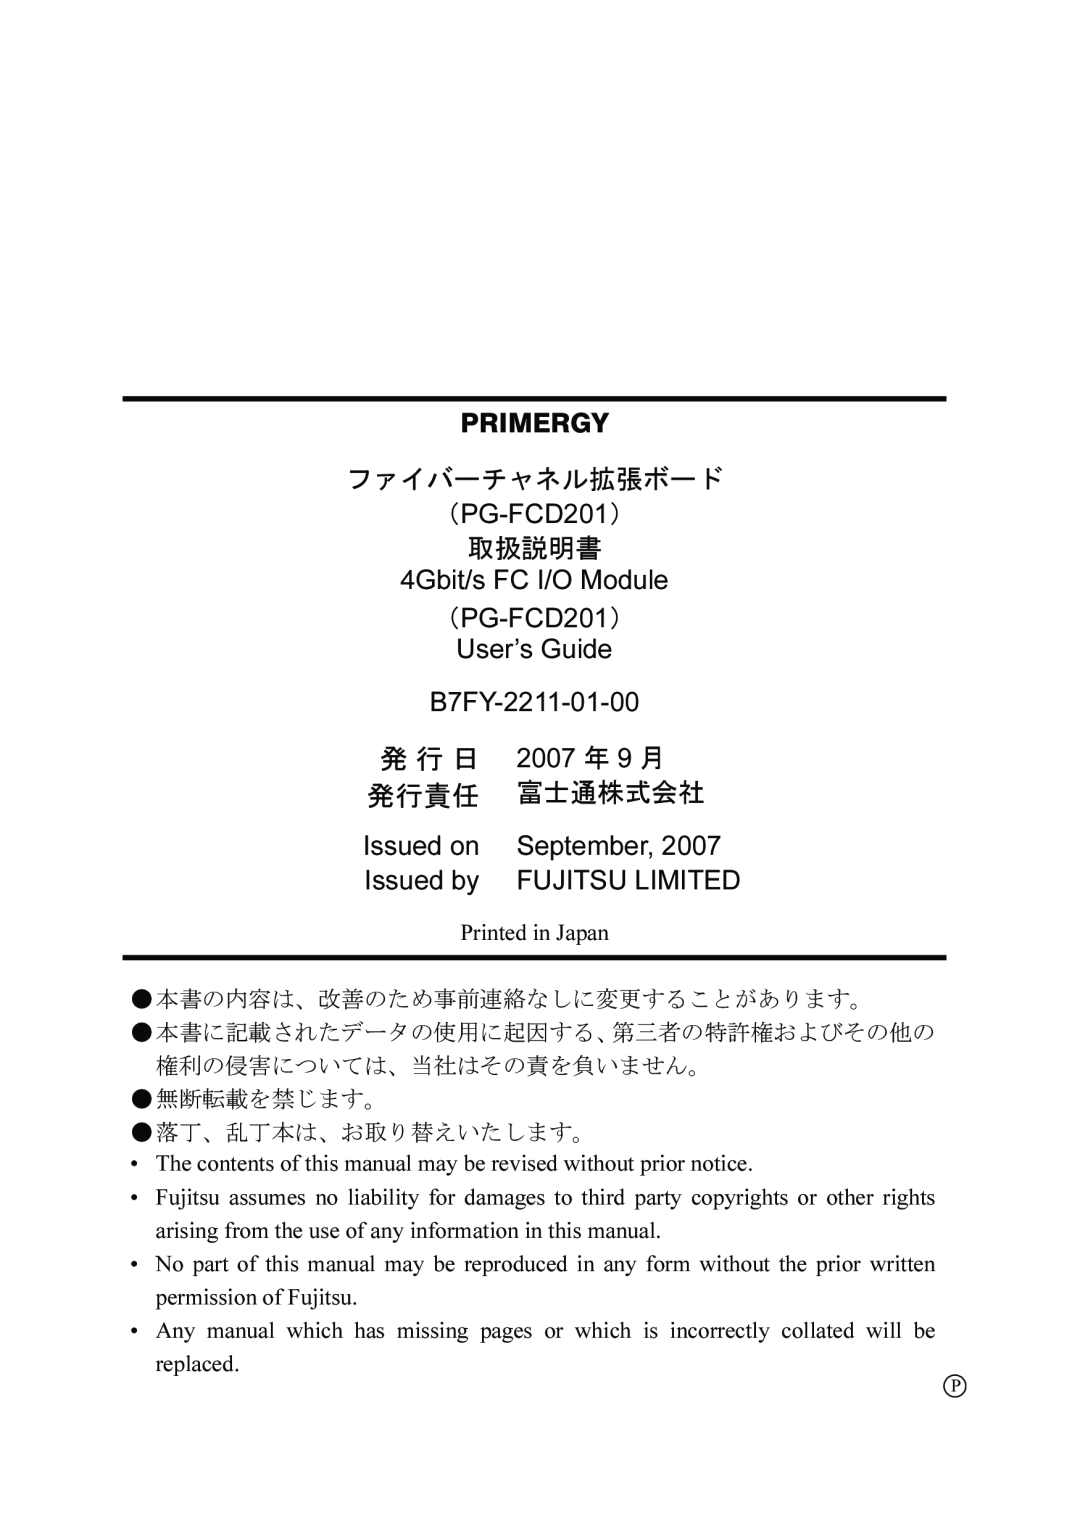 Fujitsu 4Gbit/s FC I/O Modules 発 行 日, 発行責任, Primergy, ファイバーチャネル拡張ボード, （PG-FCD201）, 取扱説明書, 2007 年 9 月, 富士通株式会社, Issued on 